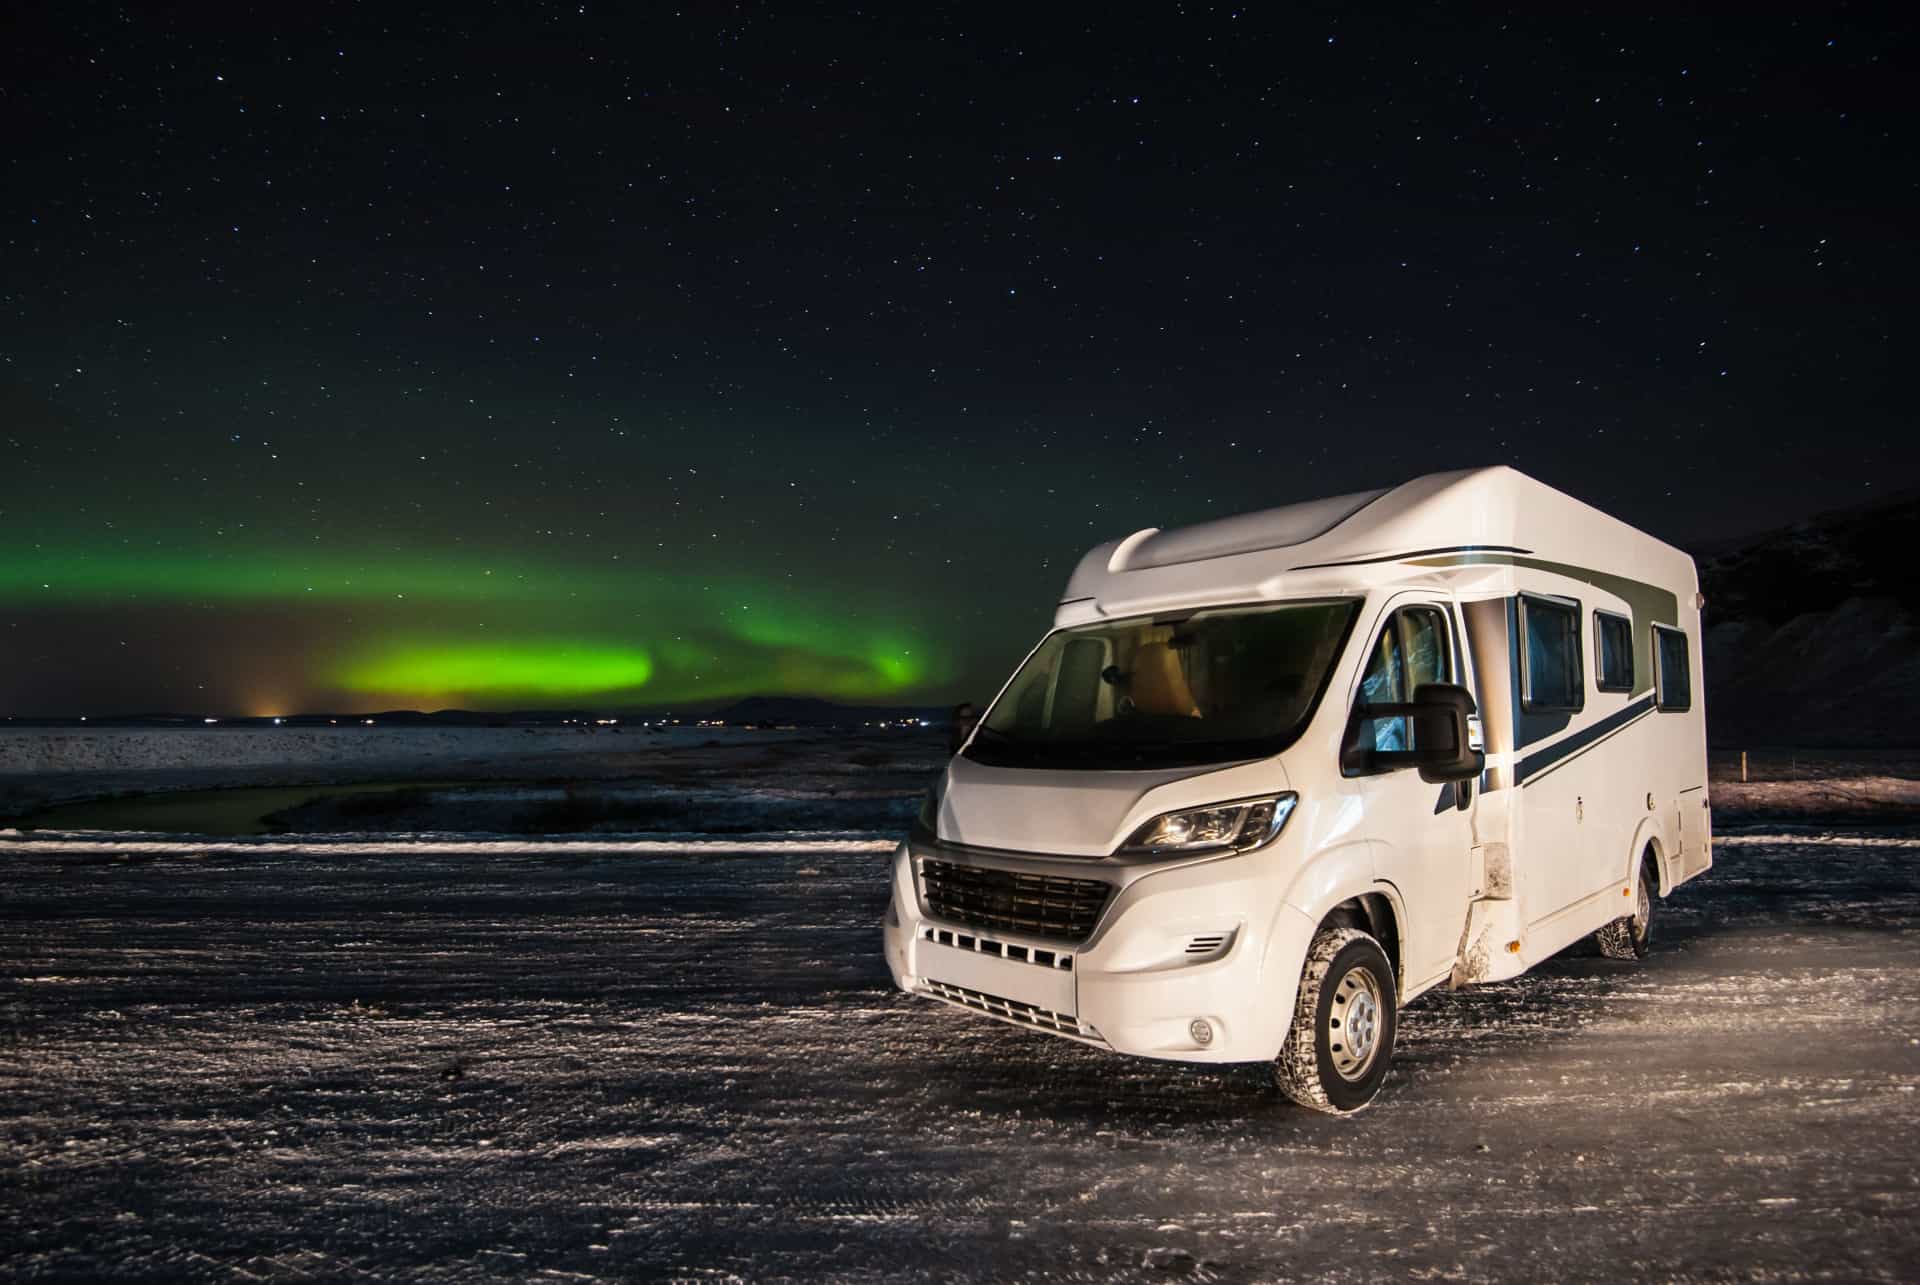 camping car aurore boreale